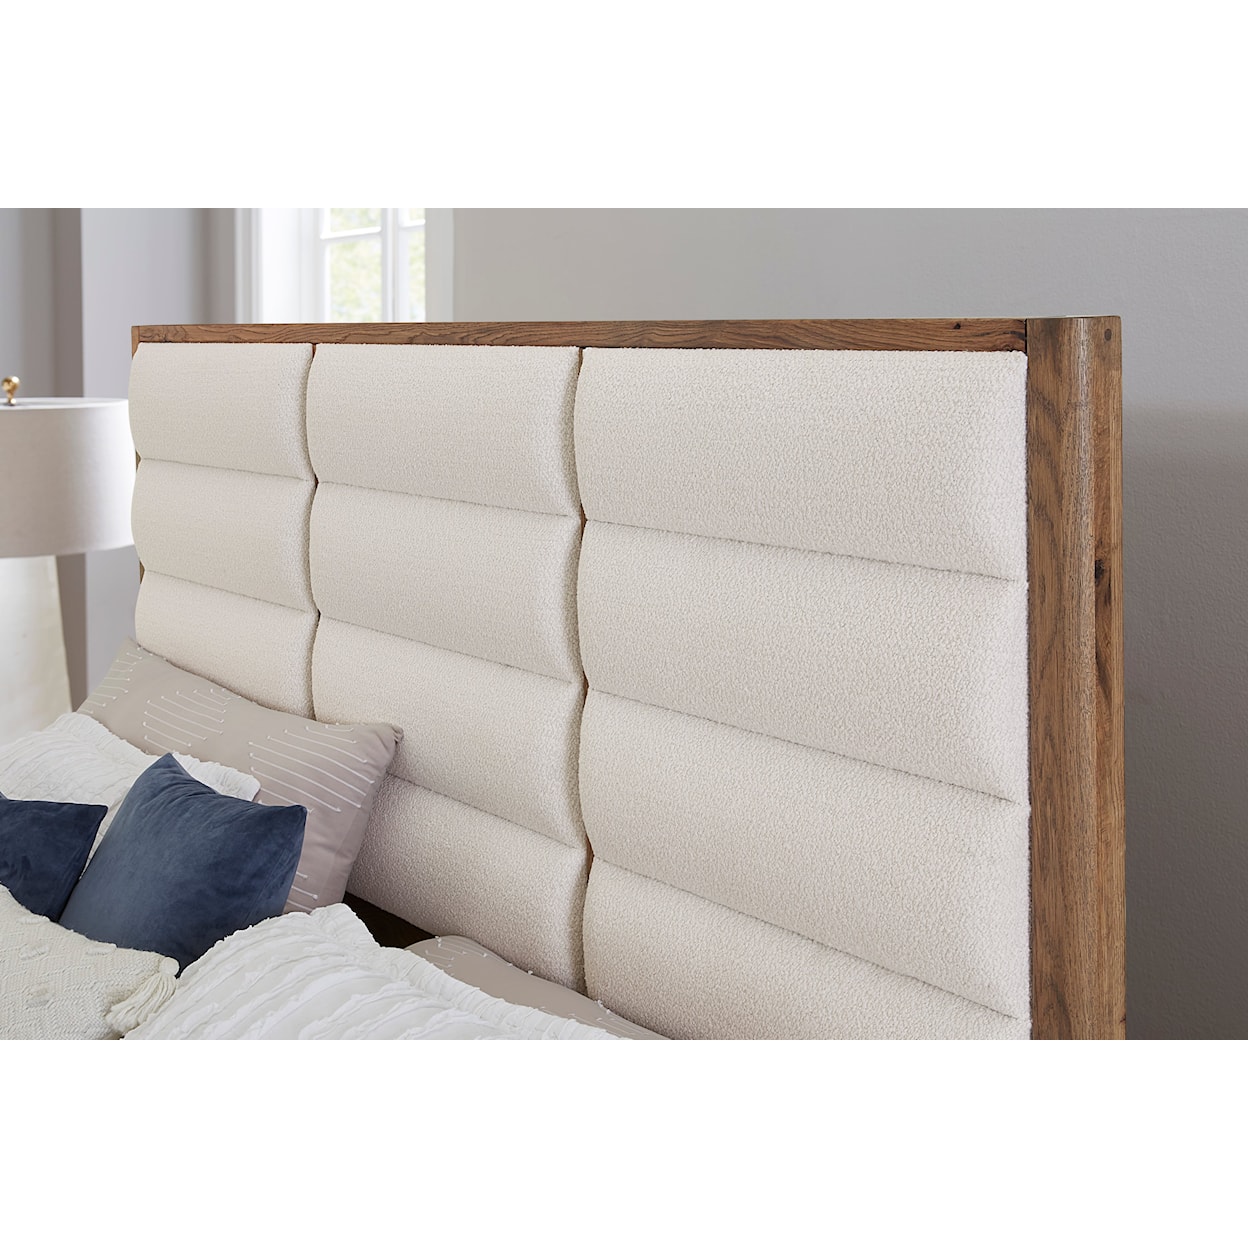 Vaughan Bassett Crafted Oak - Natural Oak Upholstered Queen Panel Bed